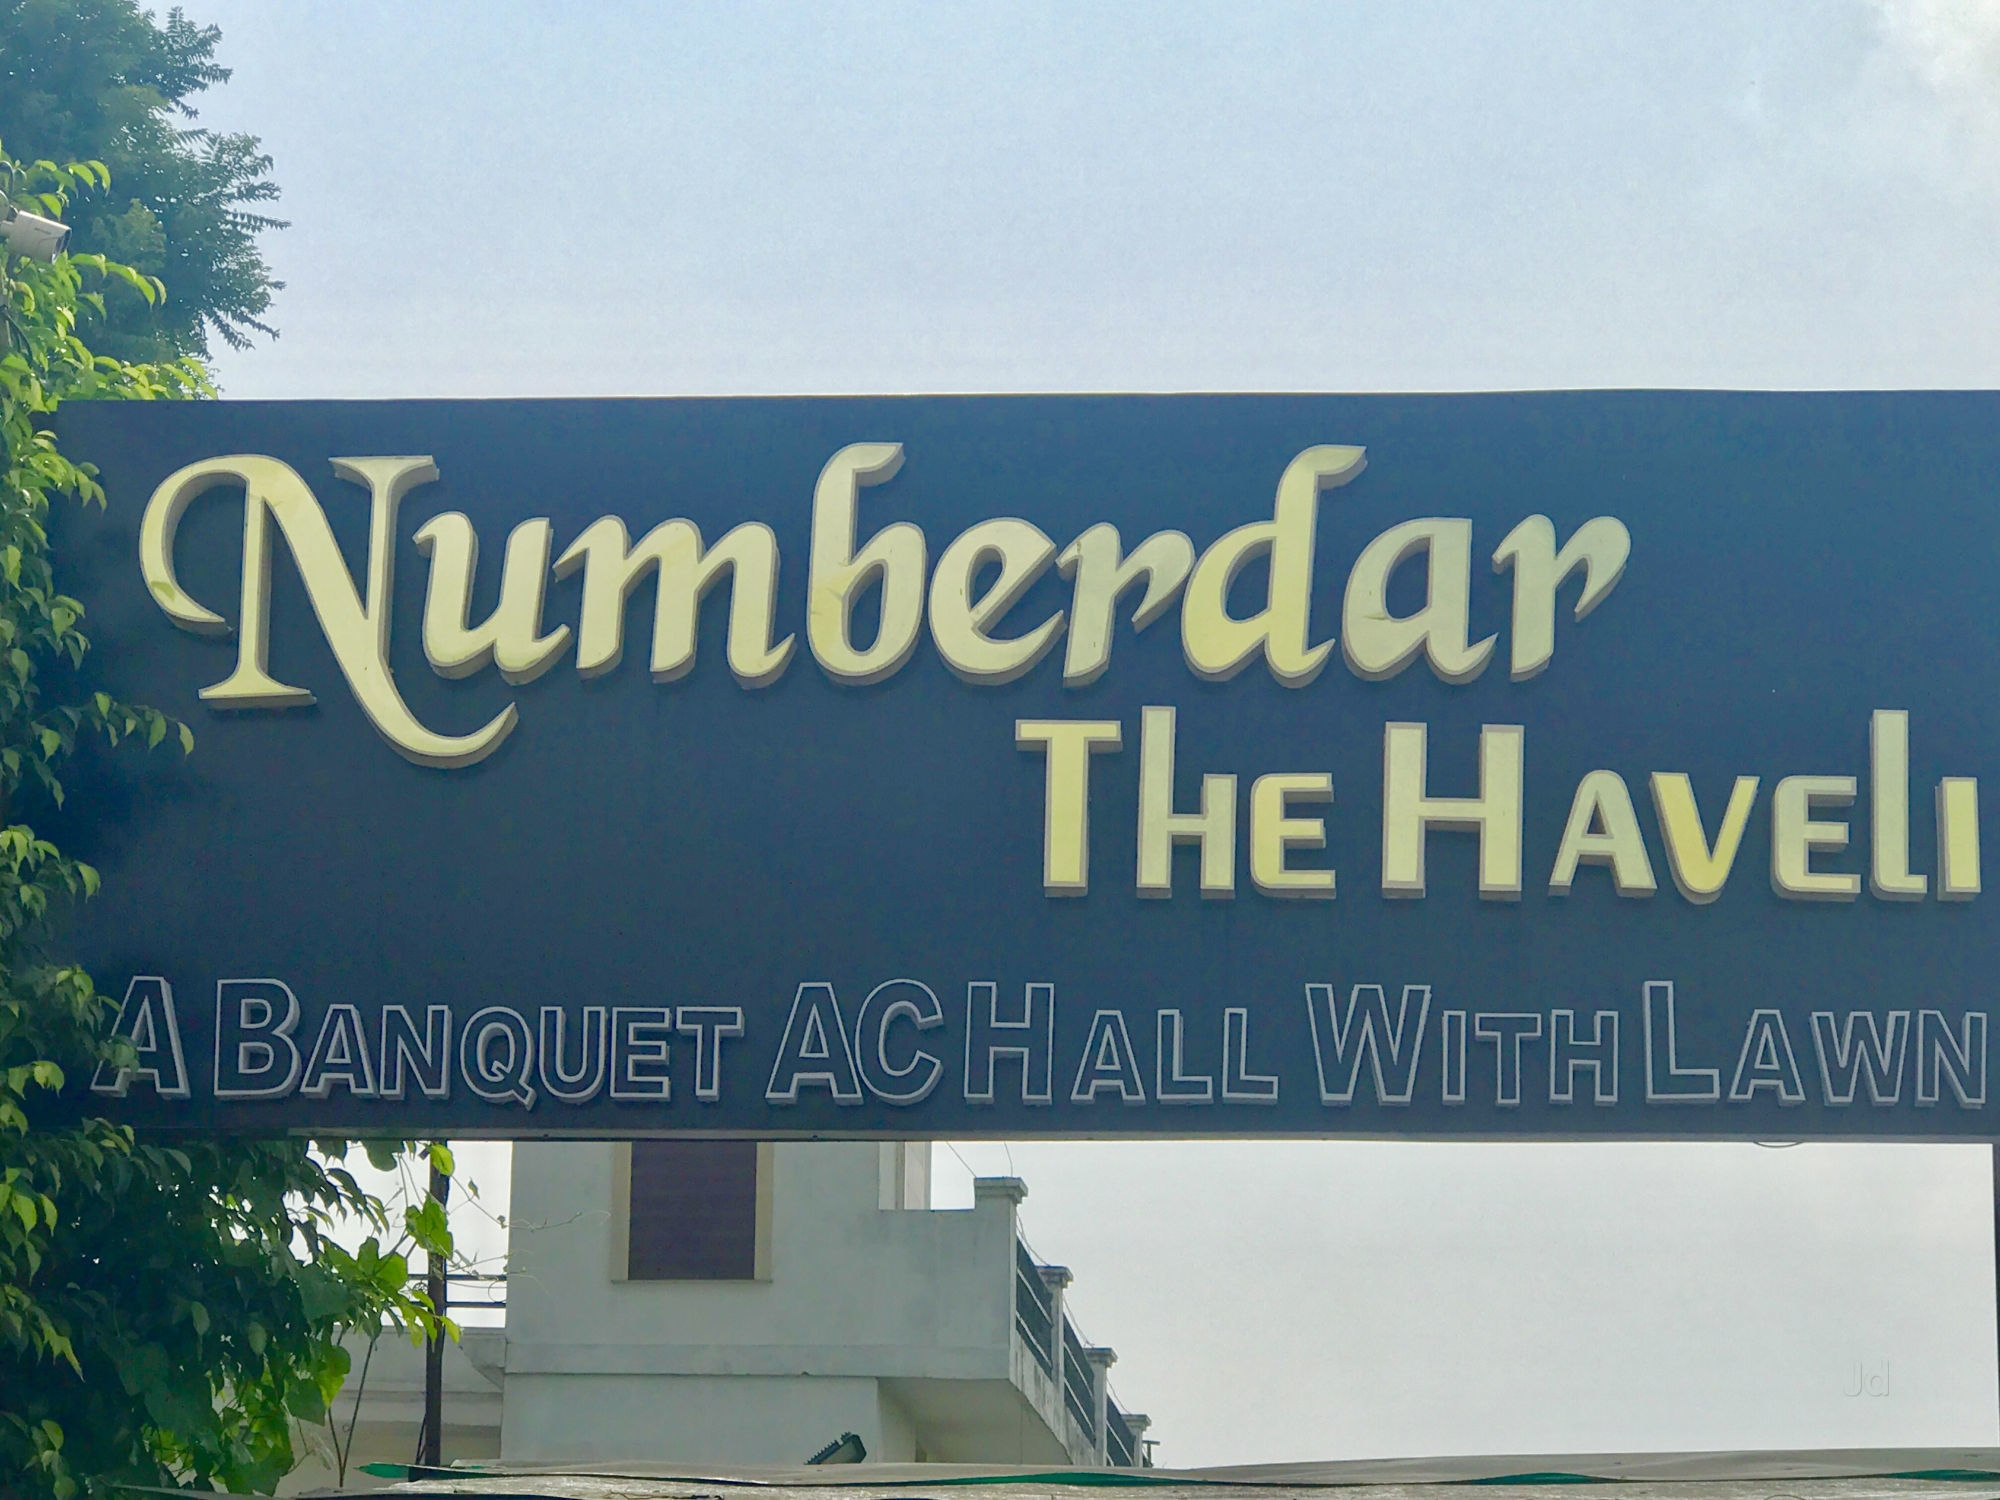 Nambardaar The Haveli|Photographer|Event Services